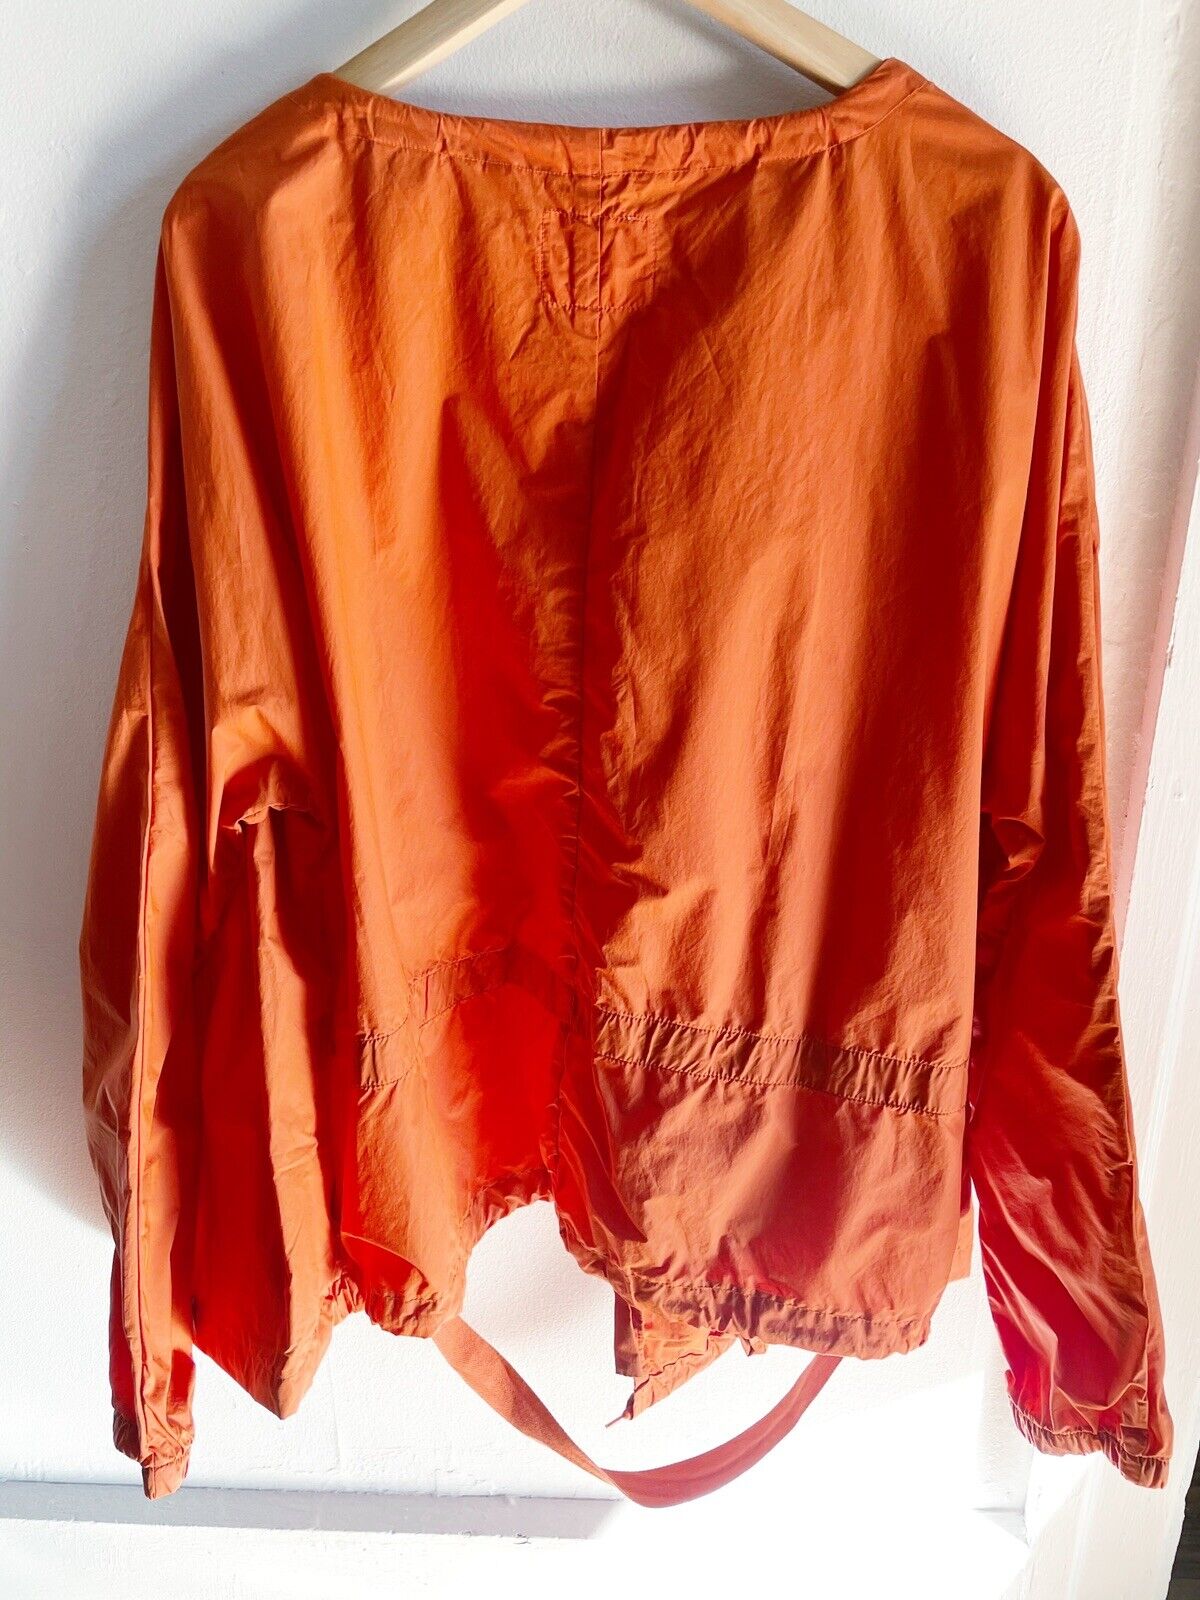 SS '2000 -Helmut Lang- Original Runway Safety Orange Bondage Jacket